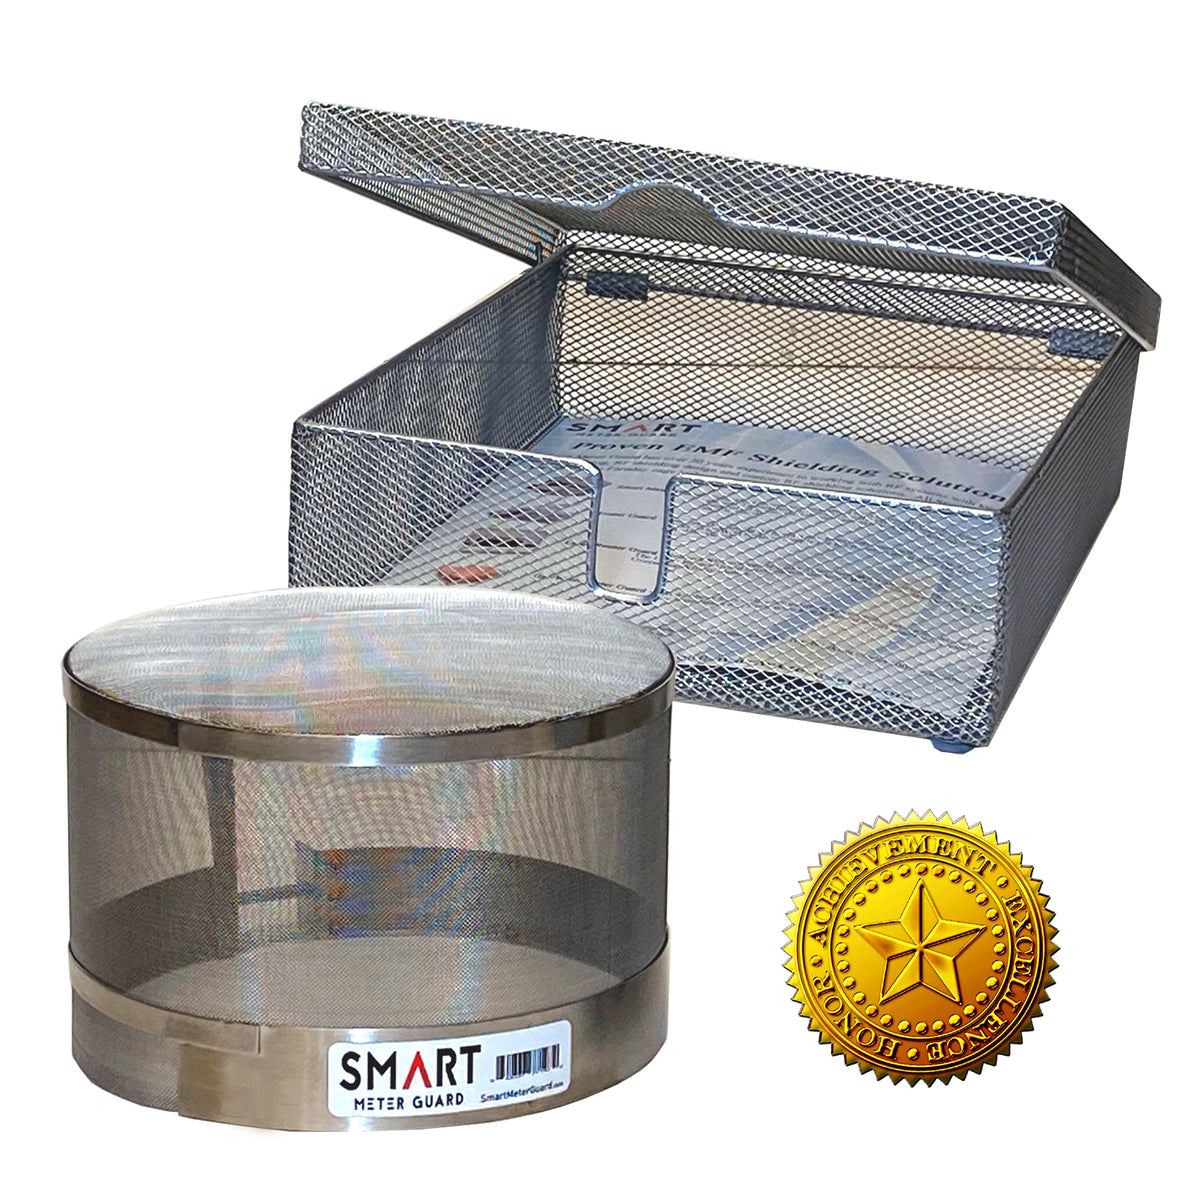 Smart Meter Radiation, EMF, router cover, smart meter cover, – Smart Meter  Guard